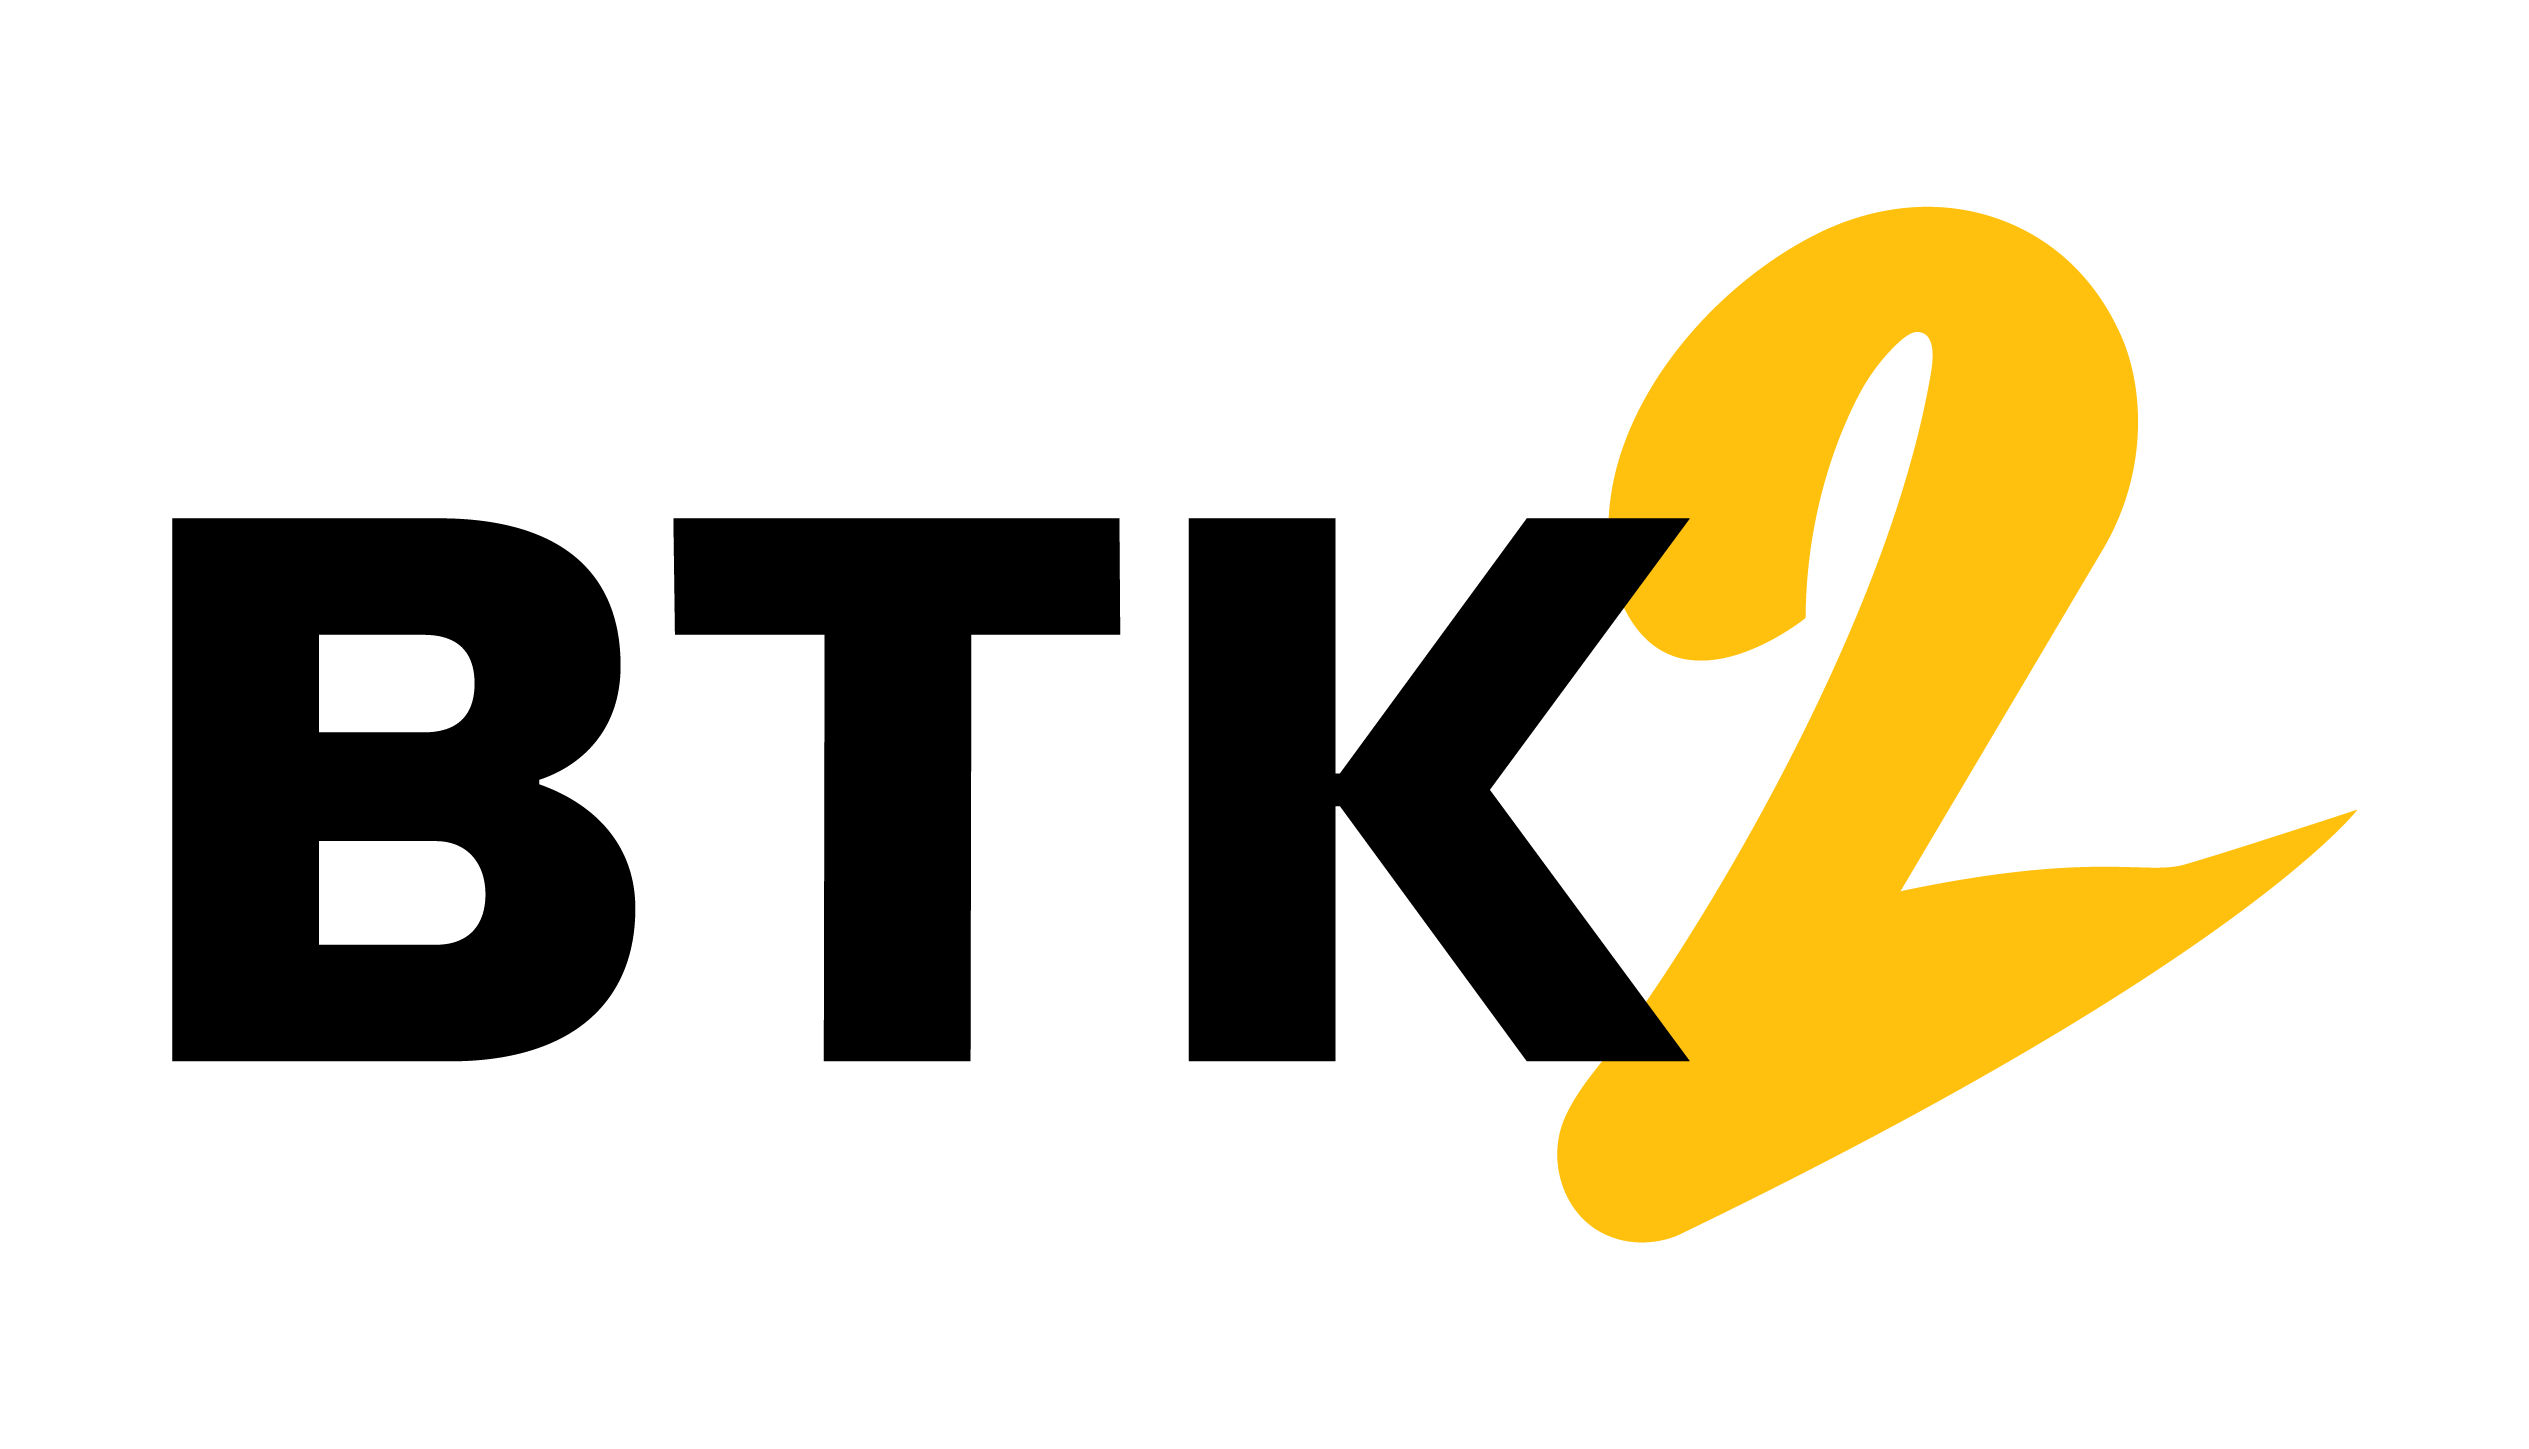 BTK-02